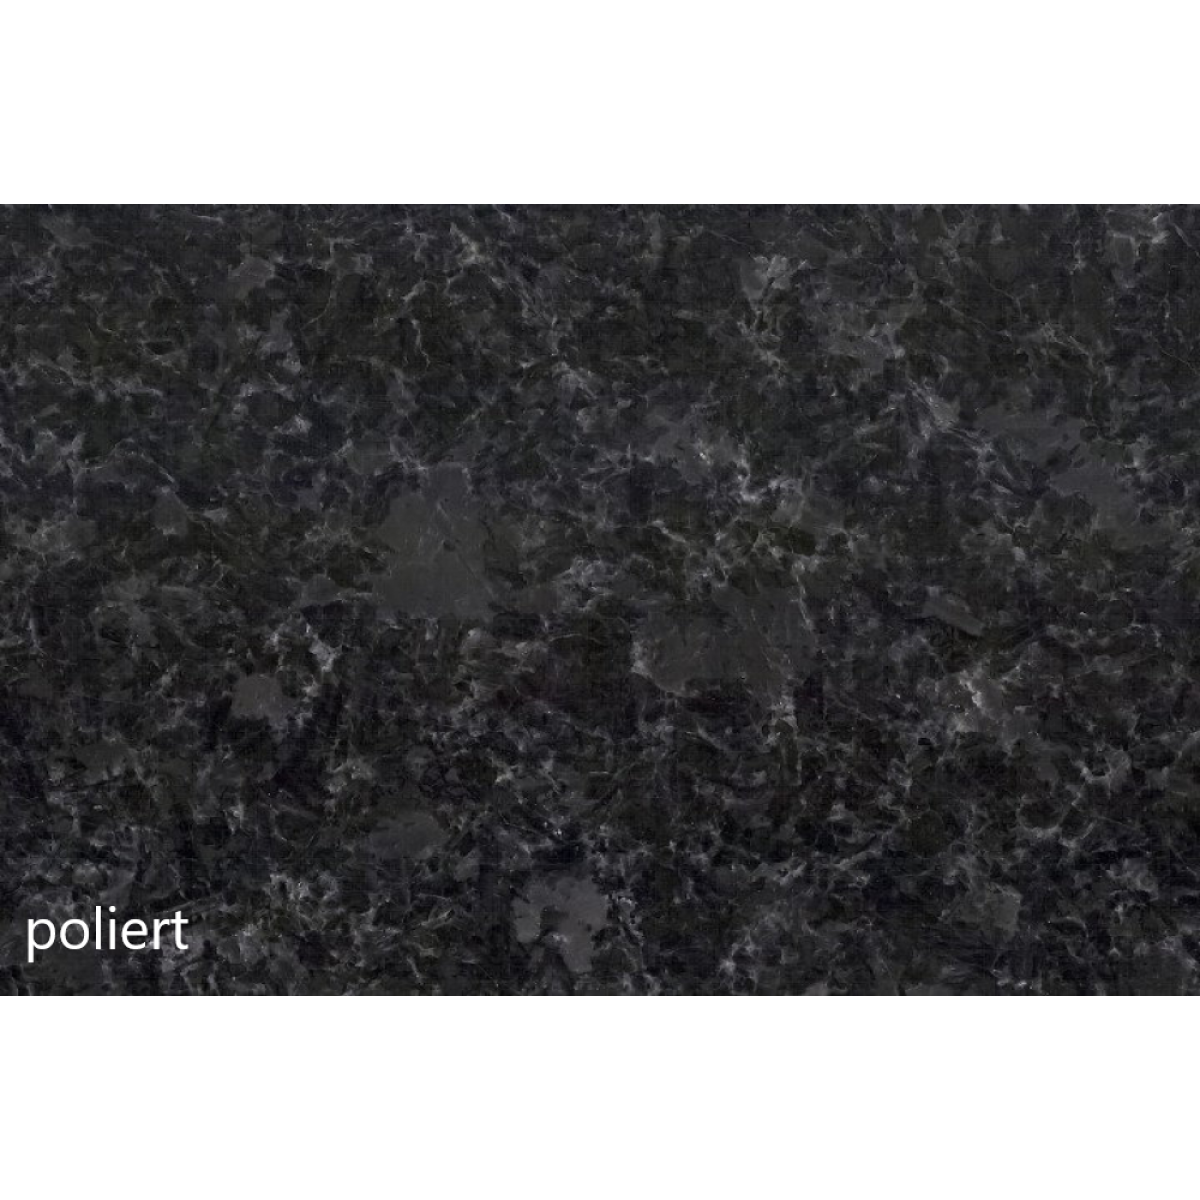 Angola Black poliert - Granit